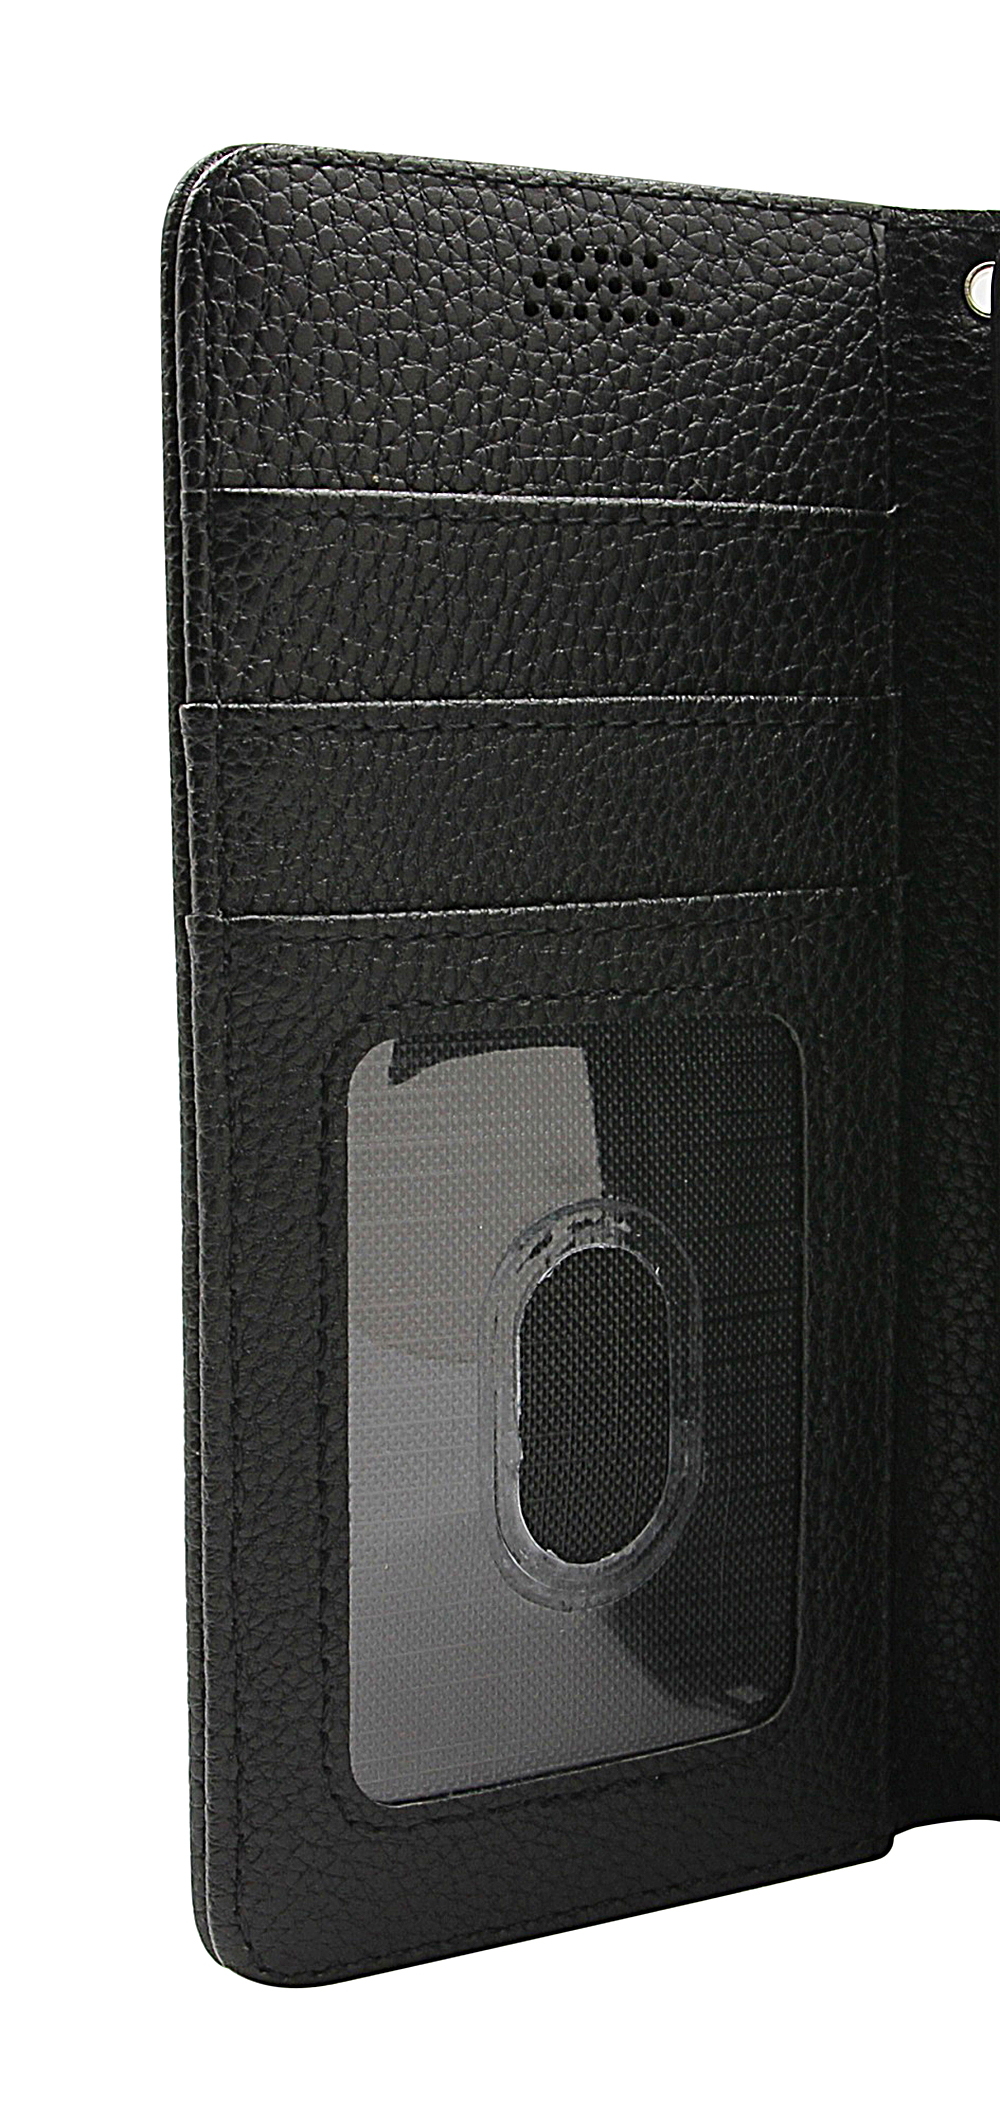 New Standcase Wallet Samsung Galaxy A14 4G / 5G